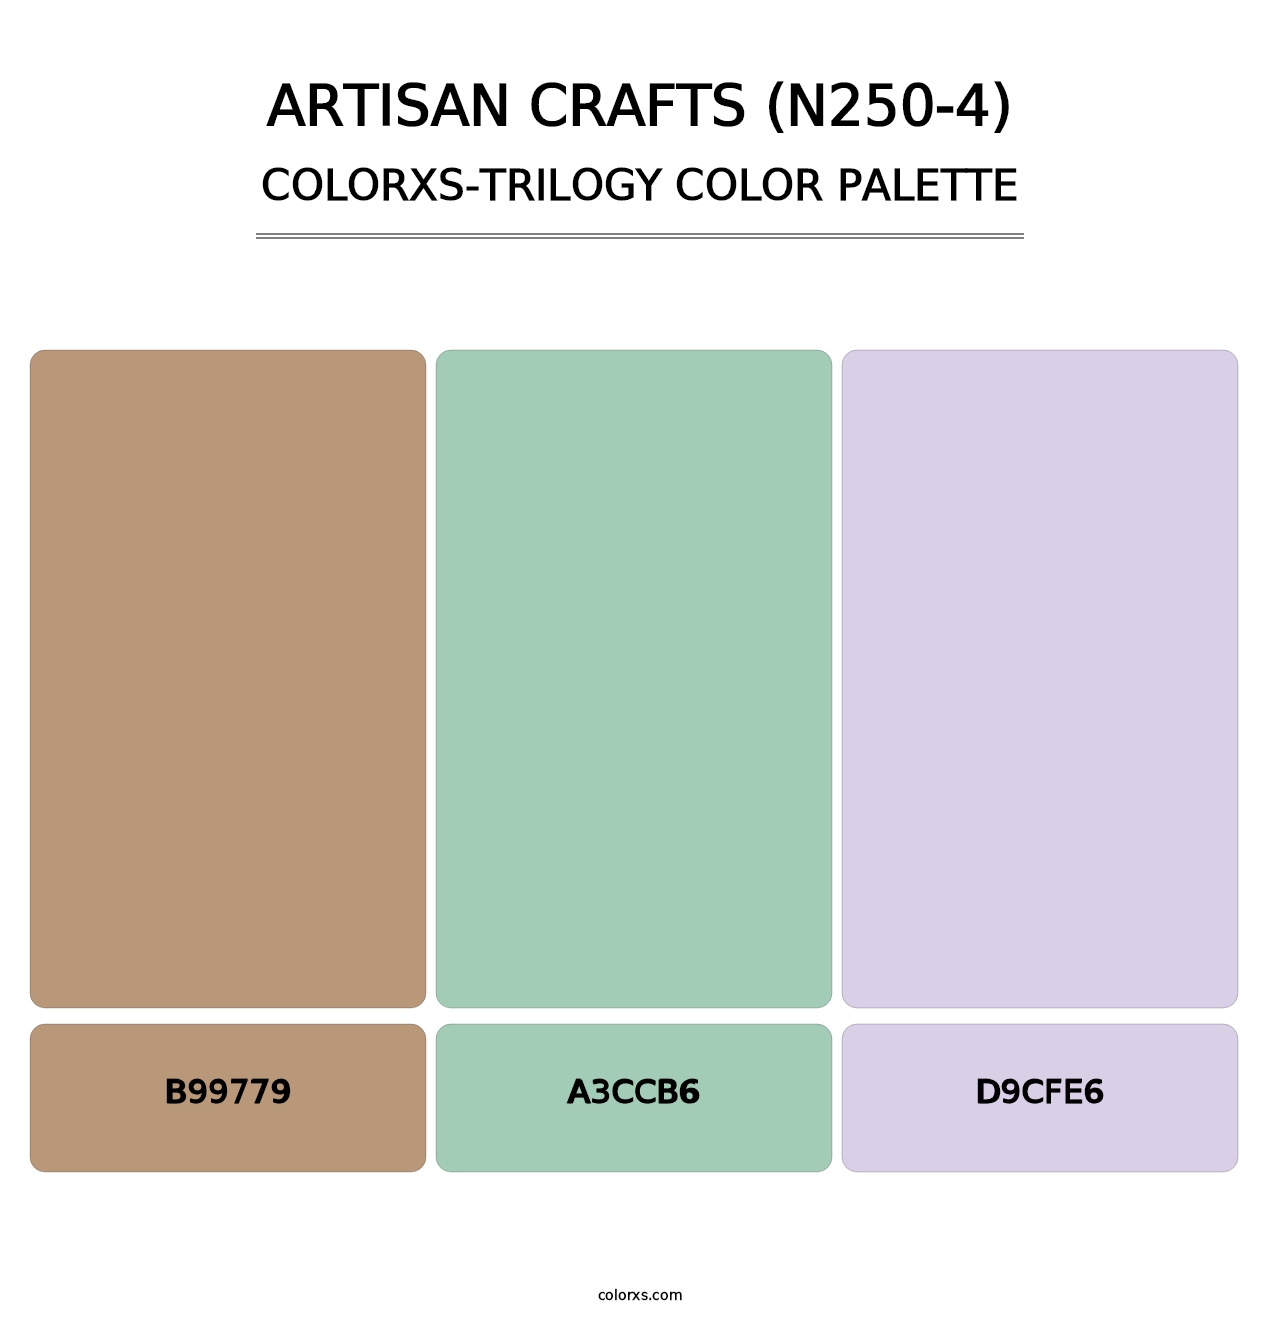 Artisan Crafts (N250-4) - Colorxs Trilogy Palette